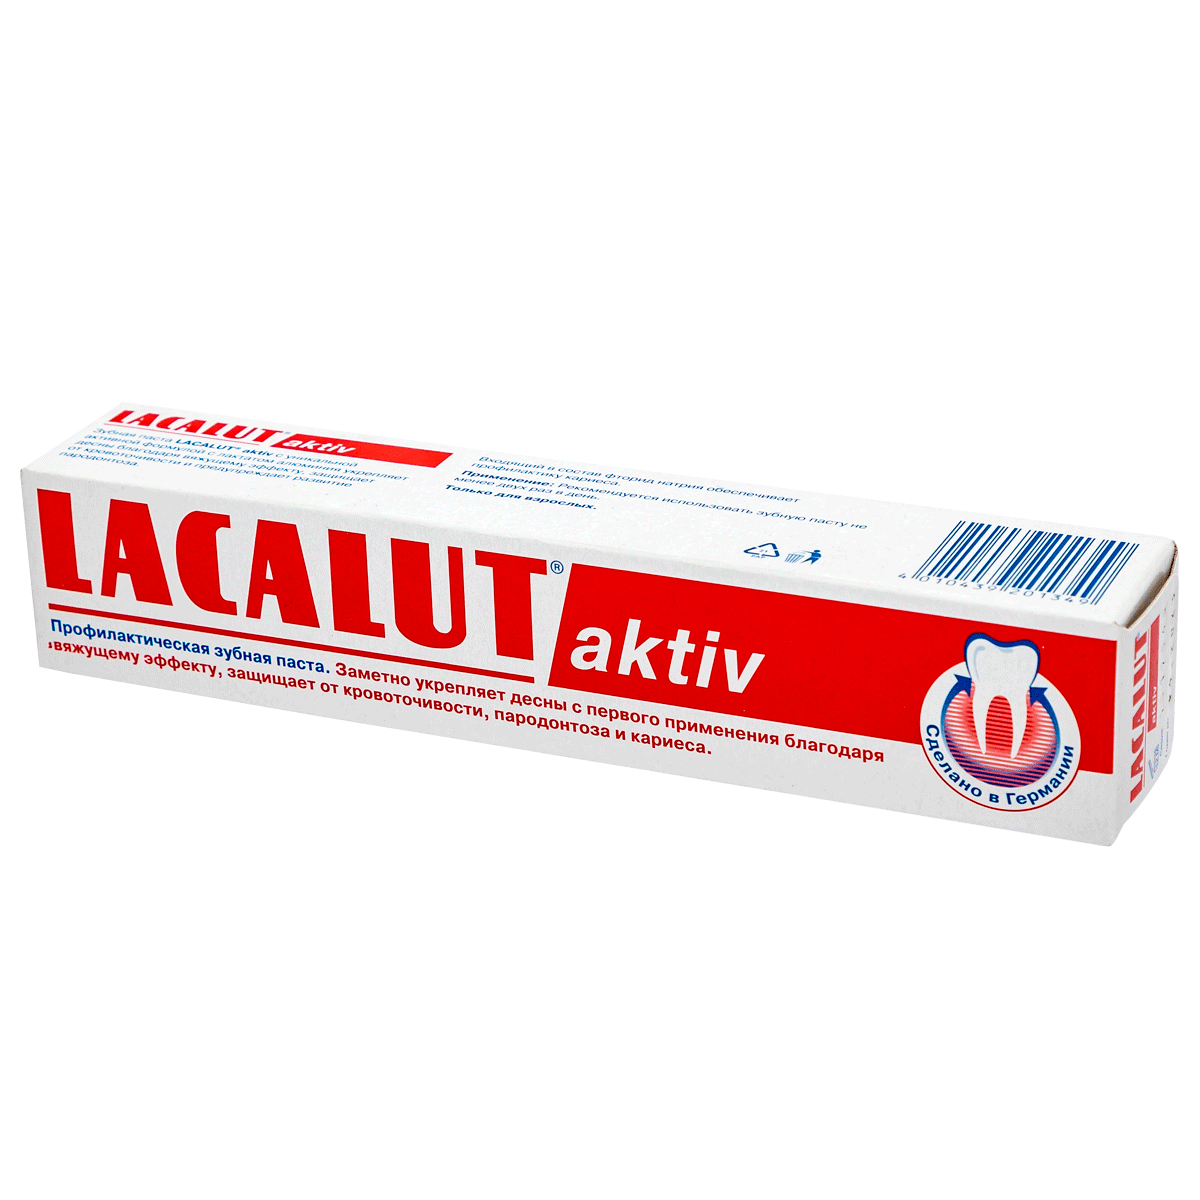 Ատամի մածուկ Lacalut Aktiv 